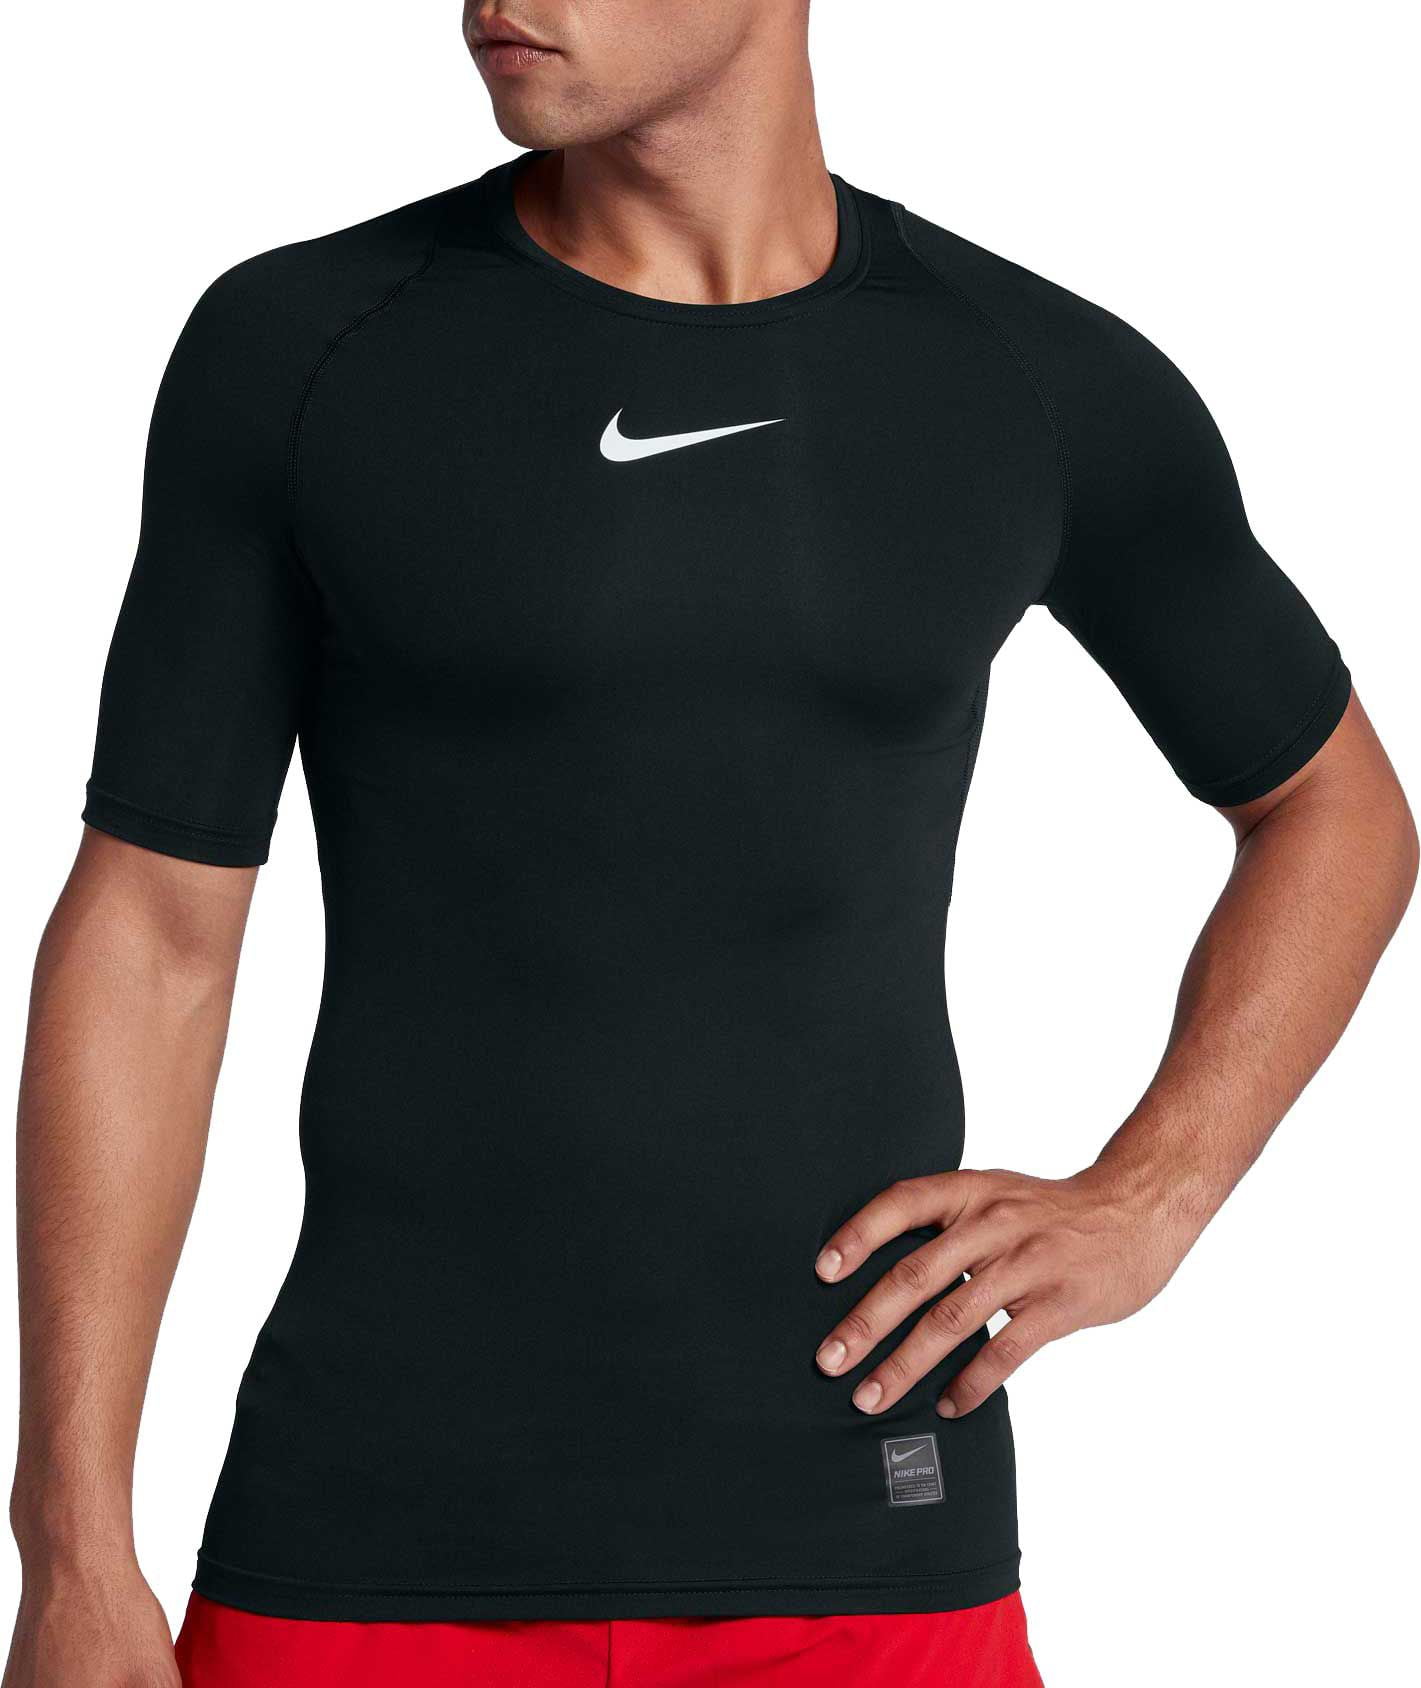 Nike Men's Pro Short Top -